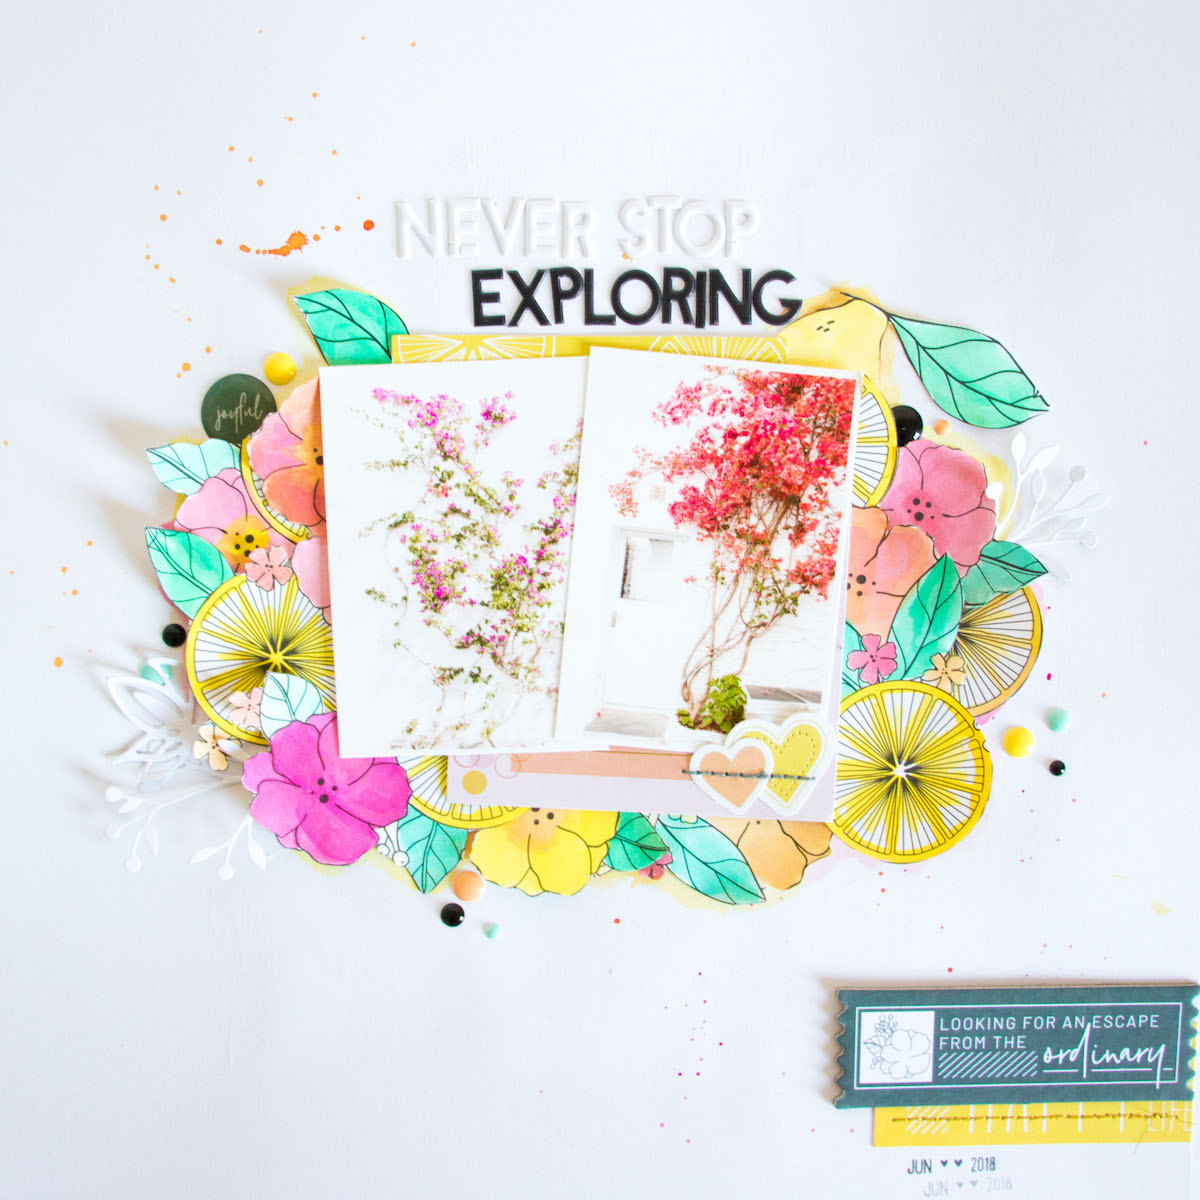 Never Stop Exploring by ScatteredConfetti. // #scrapbooking #pinkfreshstudio #watercolors